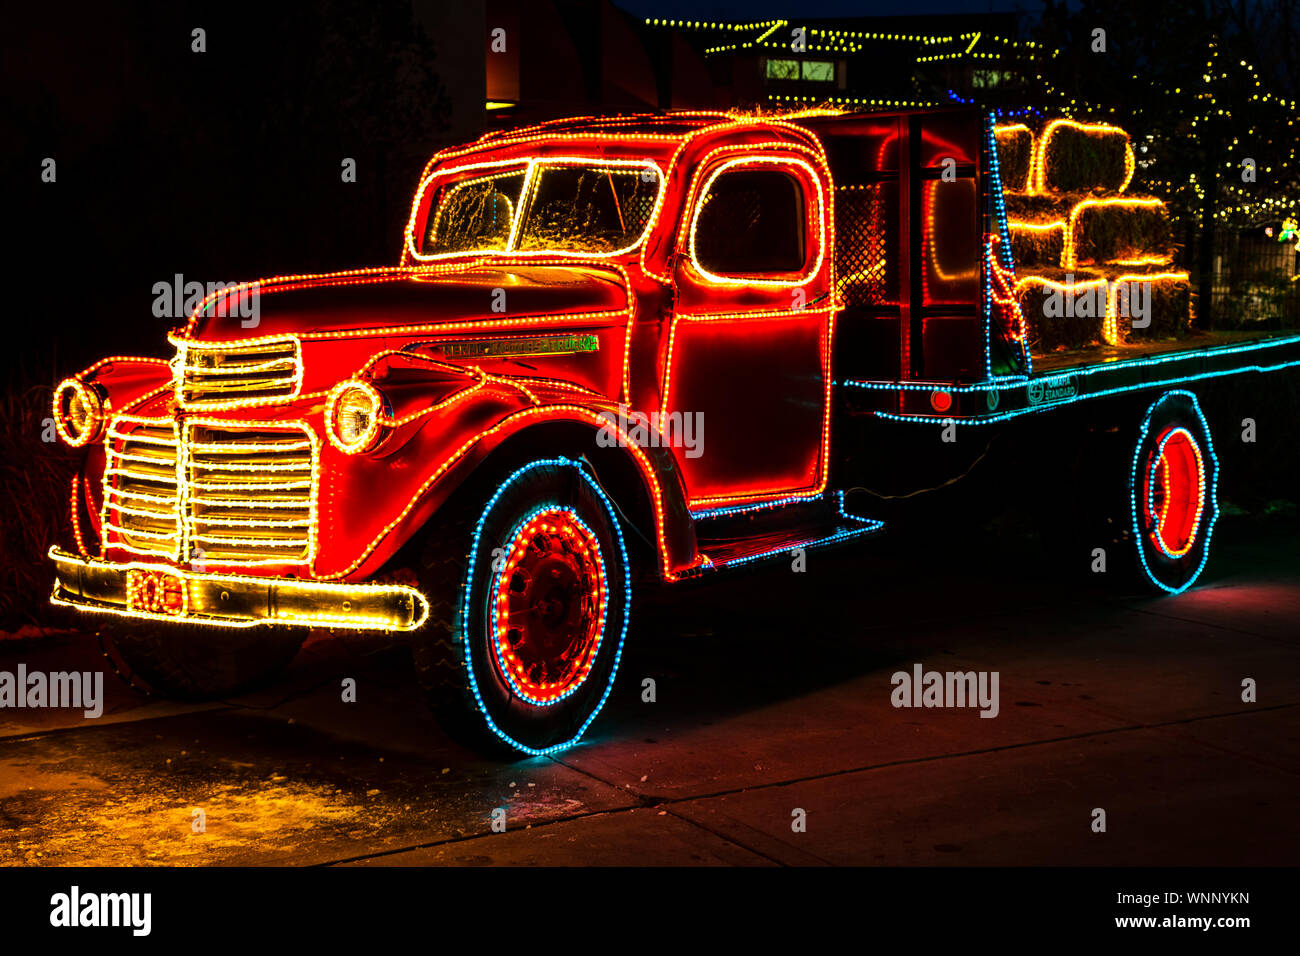 Truck decorated with Christmas lights, River of Lights, Albuquerque Bio Park, Albuquerque, New Mexico USA Stock Photo